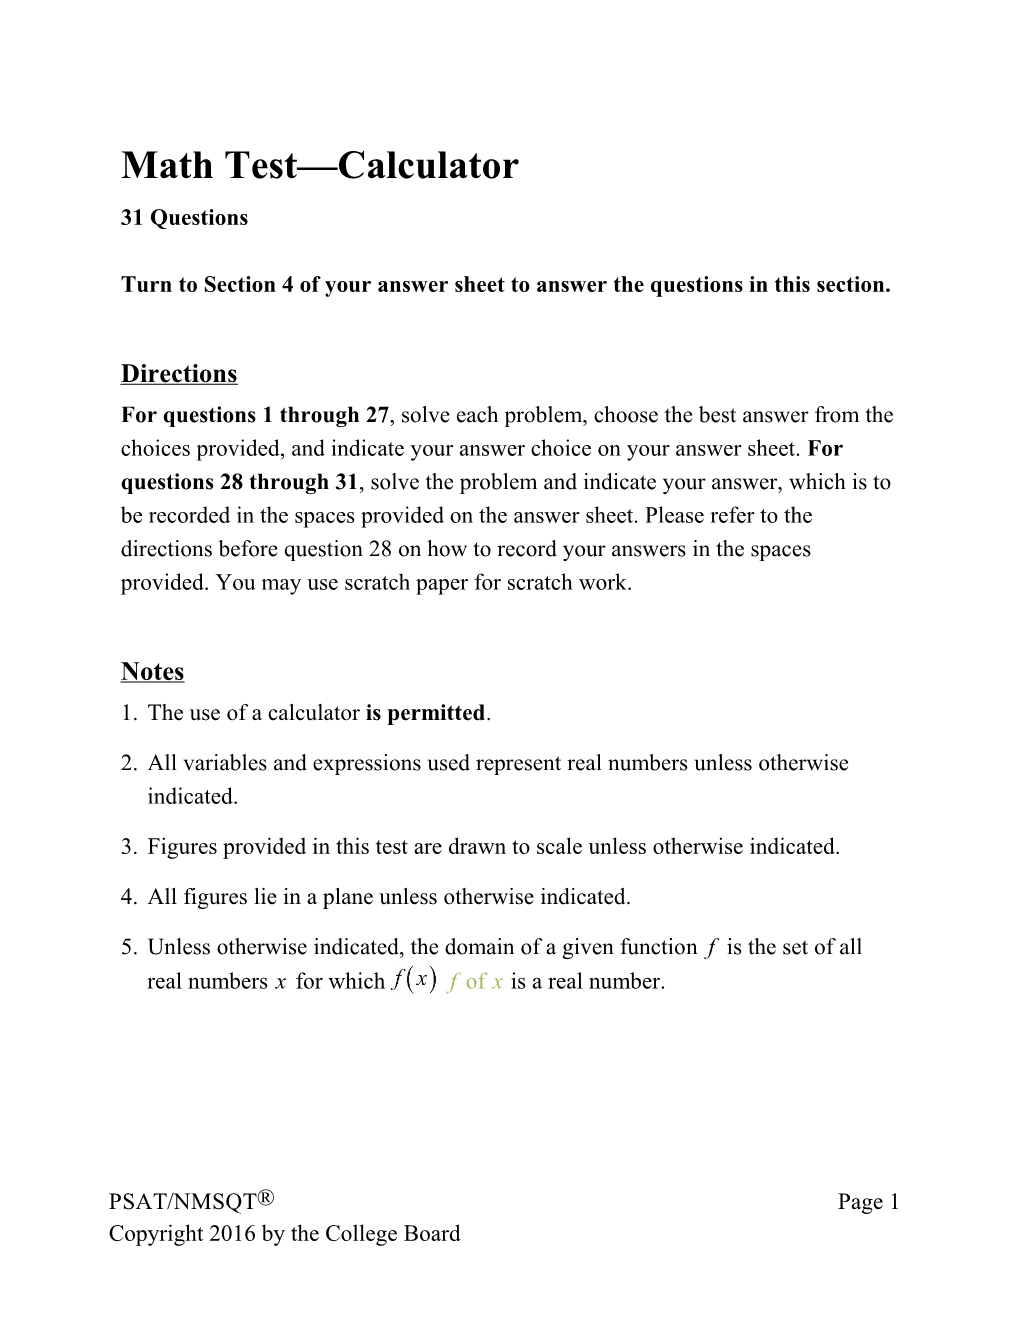 PSAT/NMSQT Practice Test 2 for Assistive Technology Math Test, Calculator SAT Suite Of